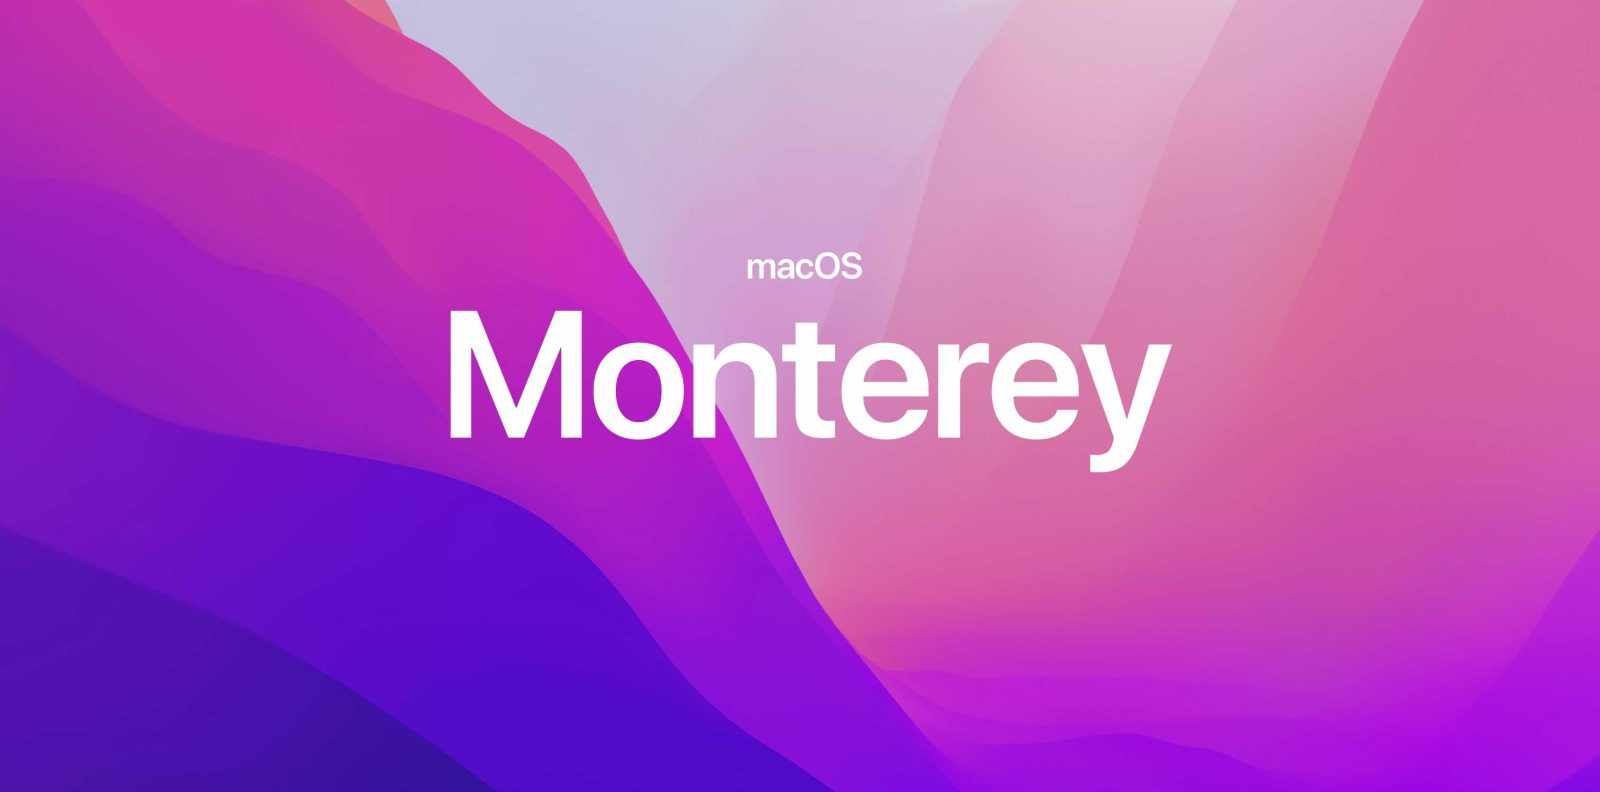 should I upgrade to macOS Monterey